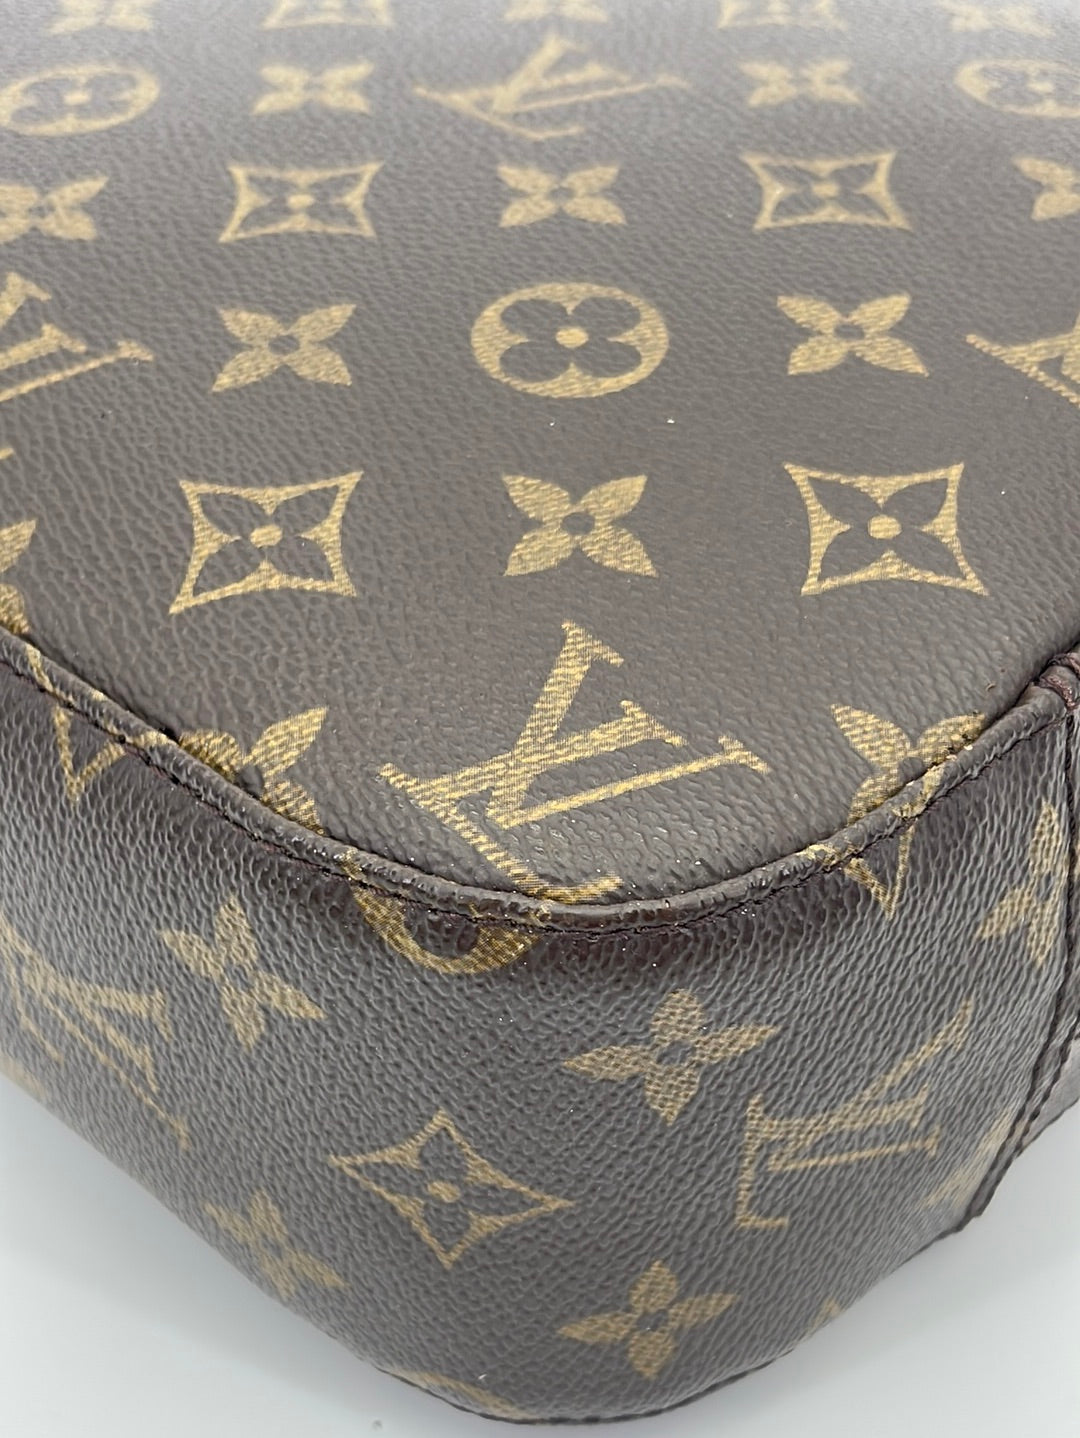 White Louis Vuitton Shoulder Bags: Shop up to −30%